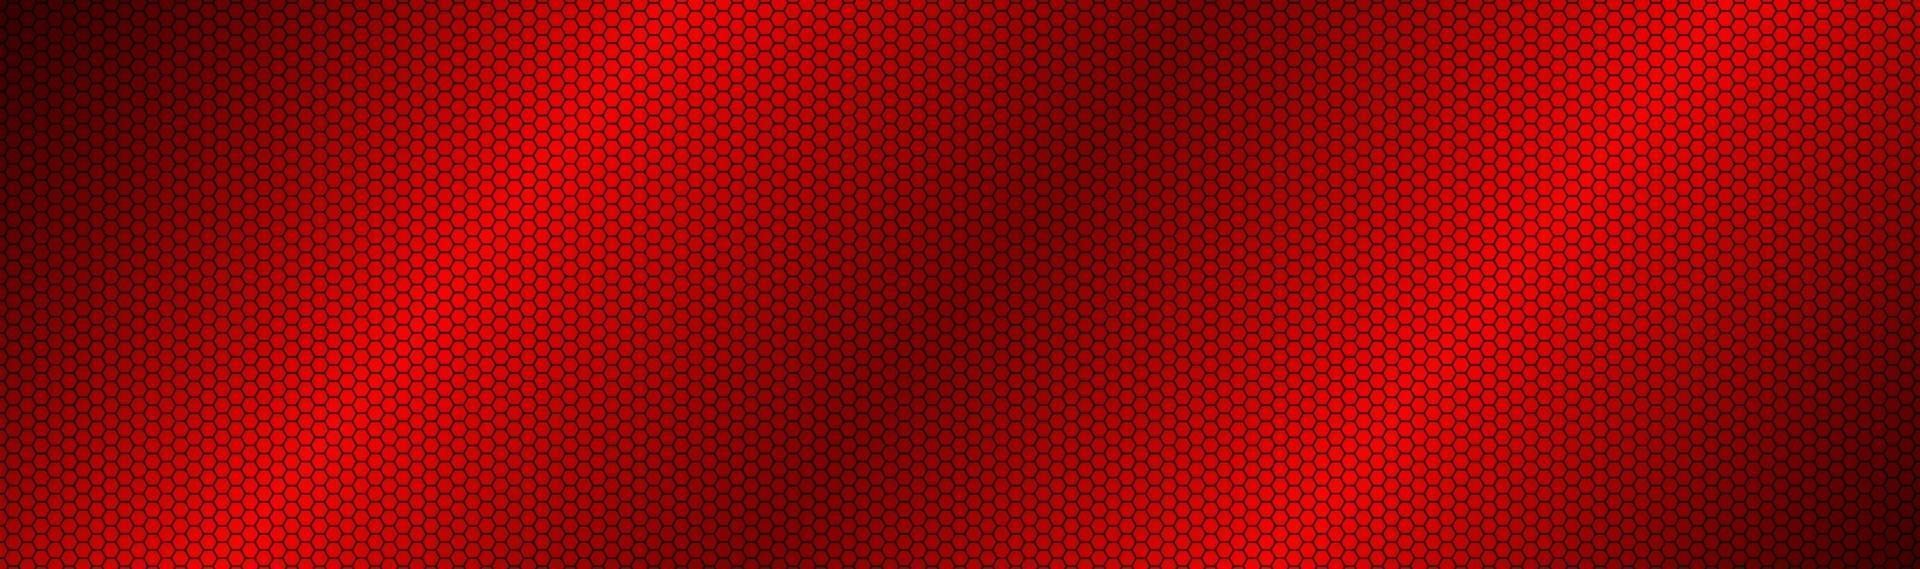 abstrato vermelho escuro geométrico hexagonal malha material cabeçalho perfurado tecnologia metálica banner vetor abstrato widescreen background